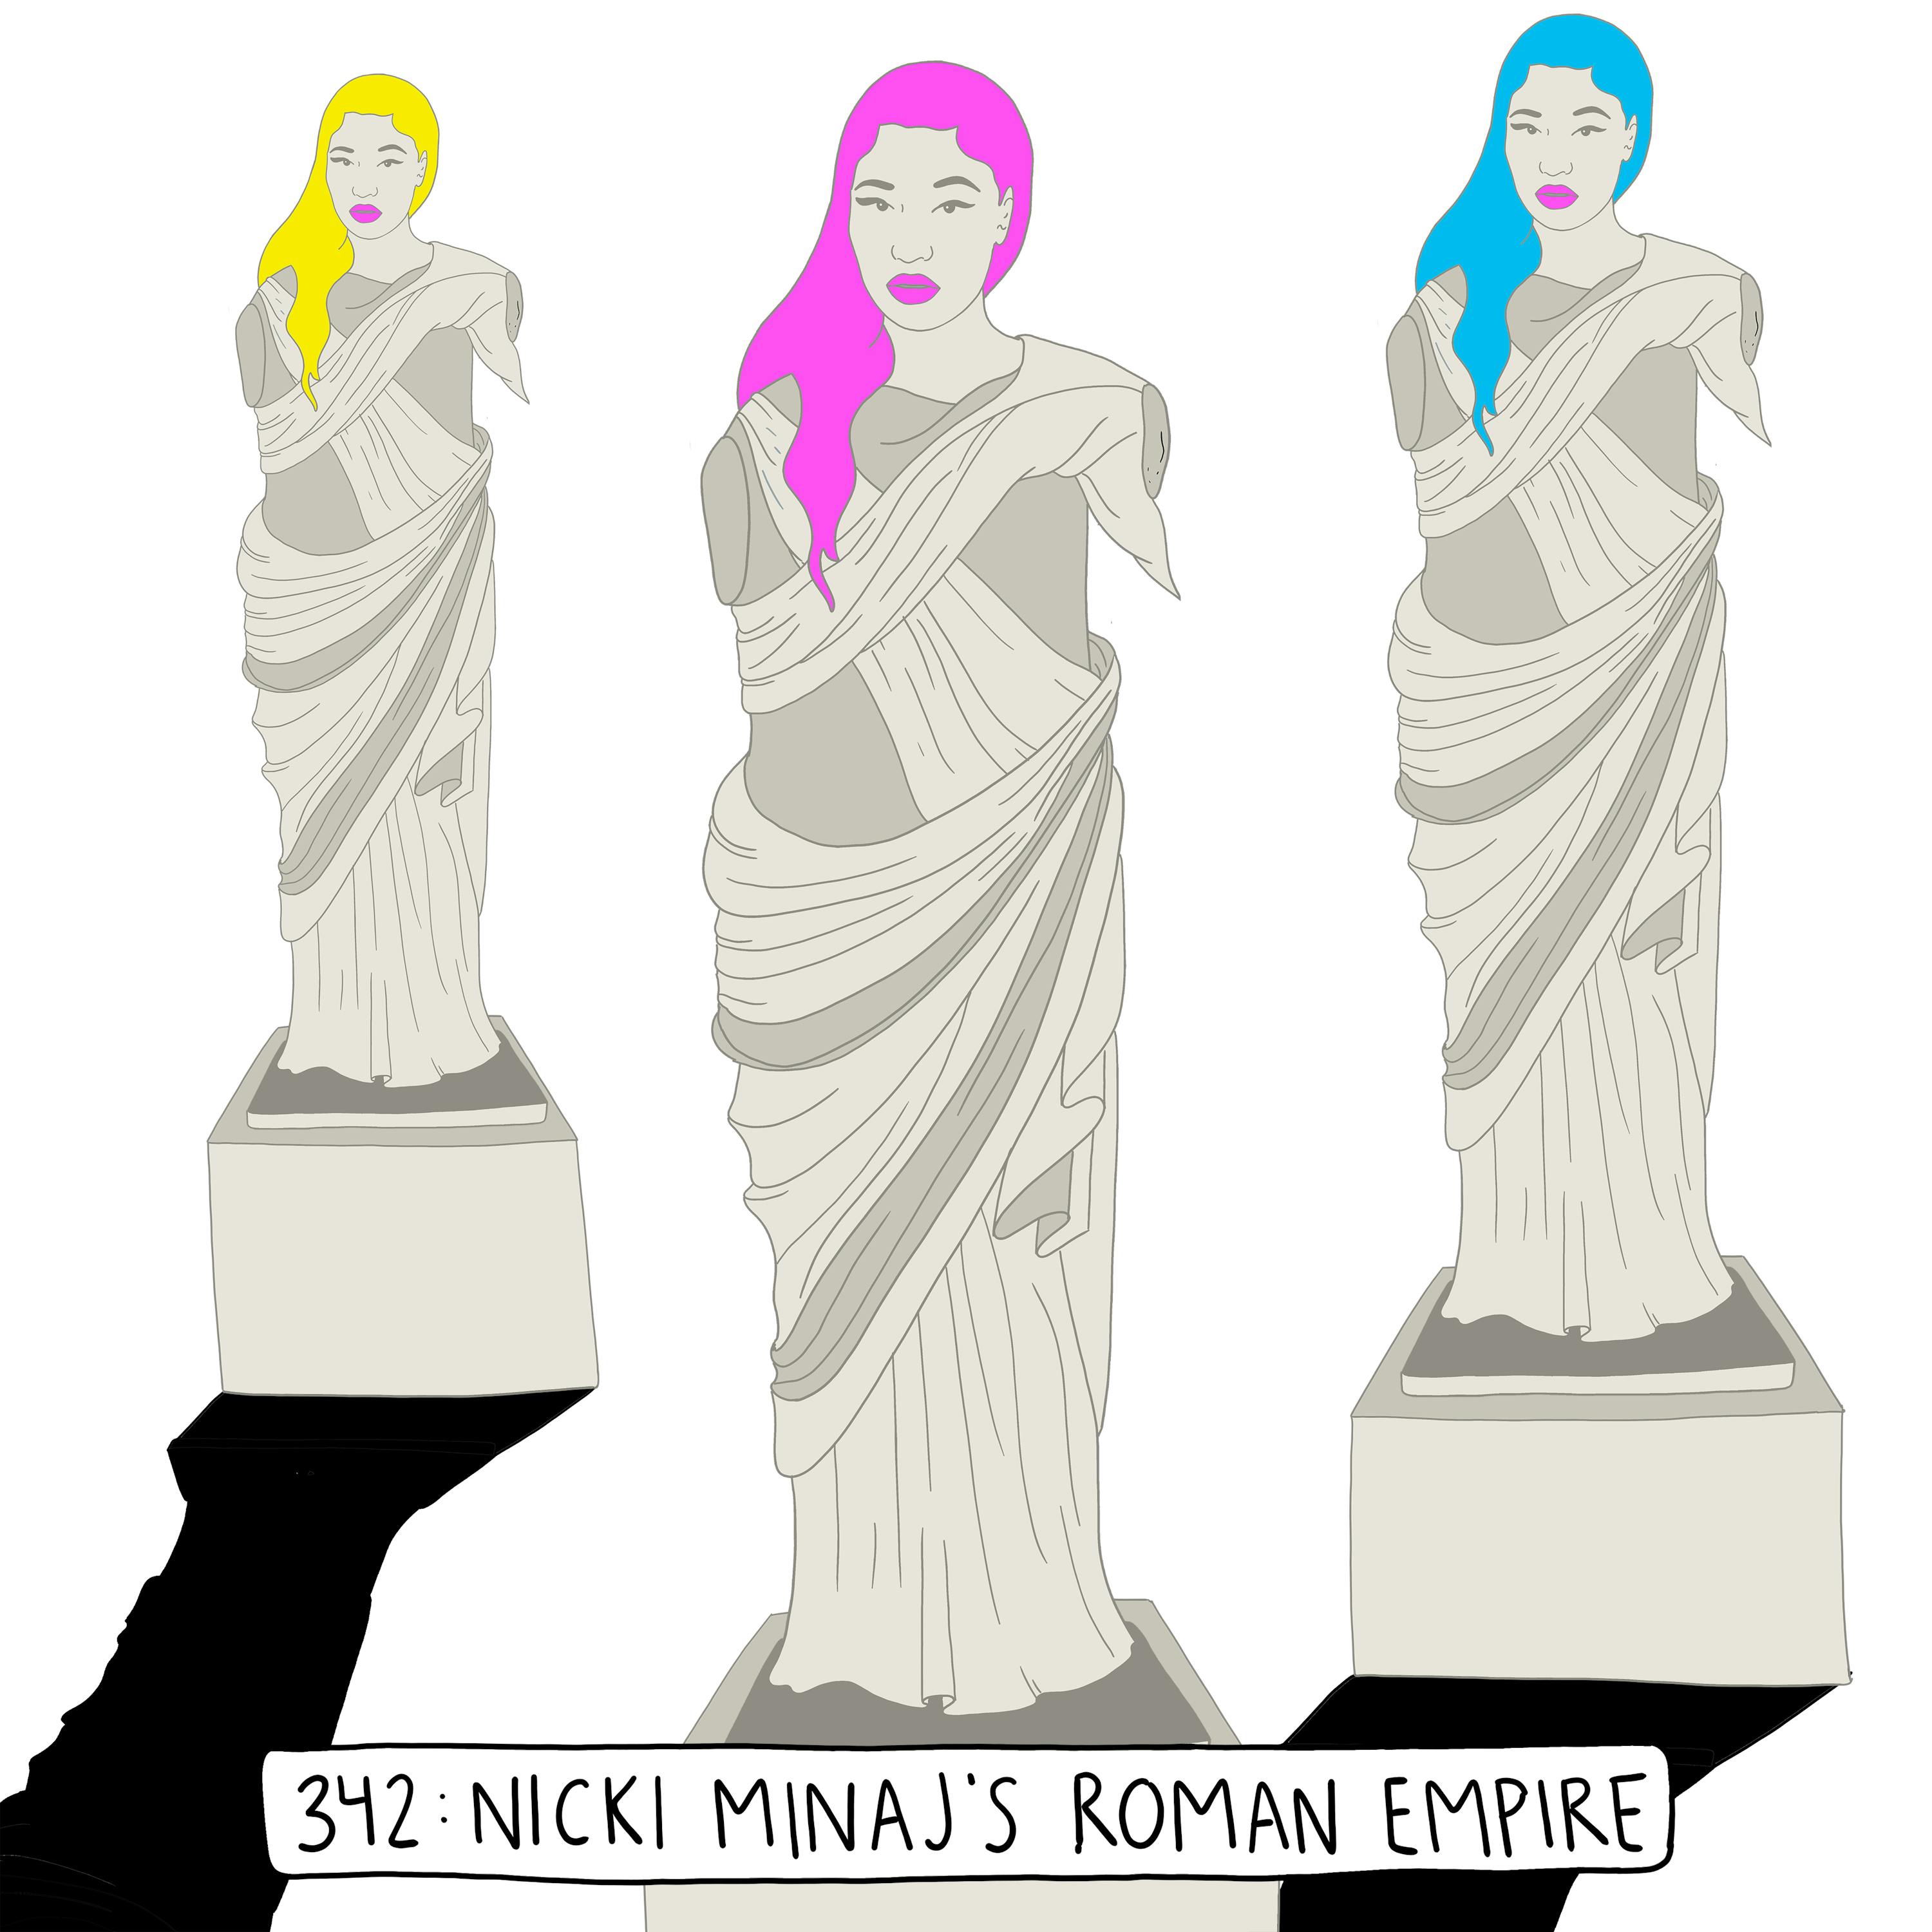 Nicki Minaj's Roman Empire